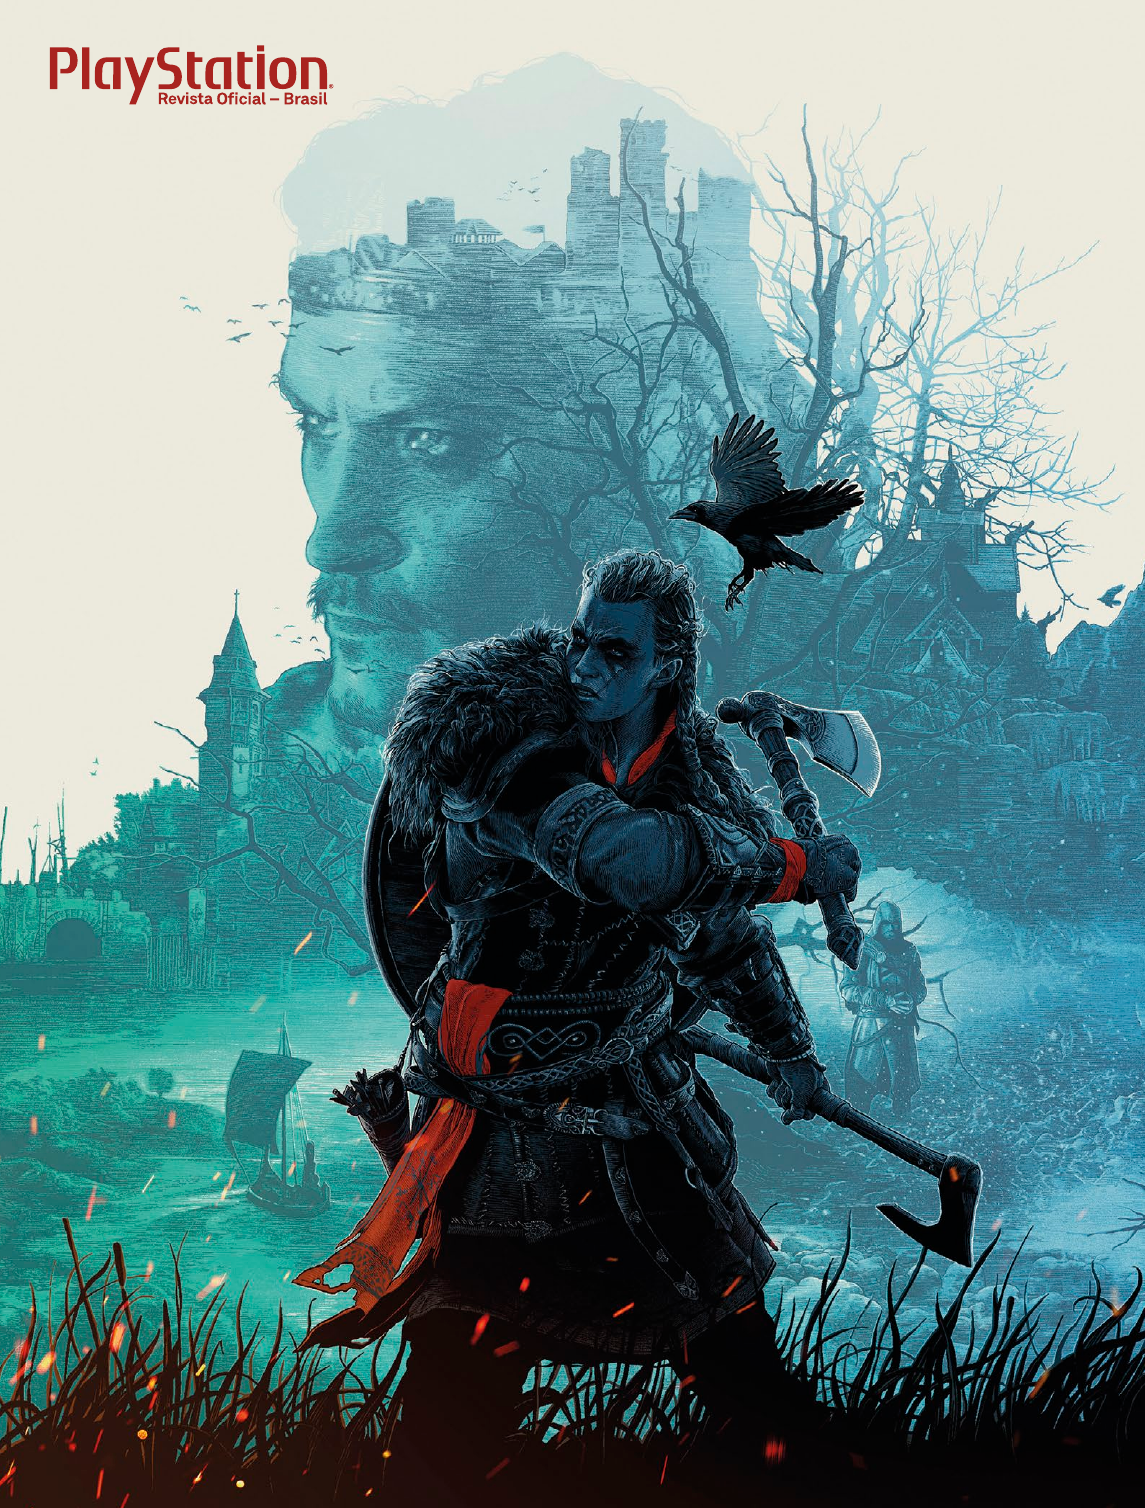 Jogo Demons Souls PS5 - Blue Point Games - Jogos de RPG - Magazine